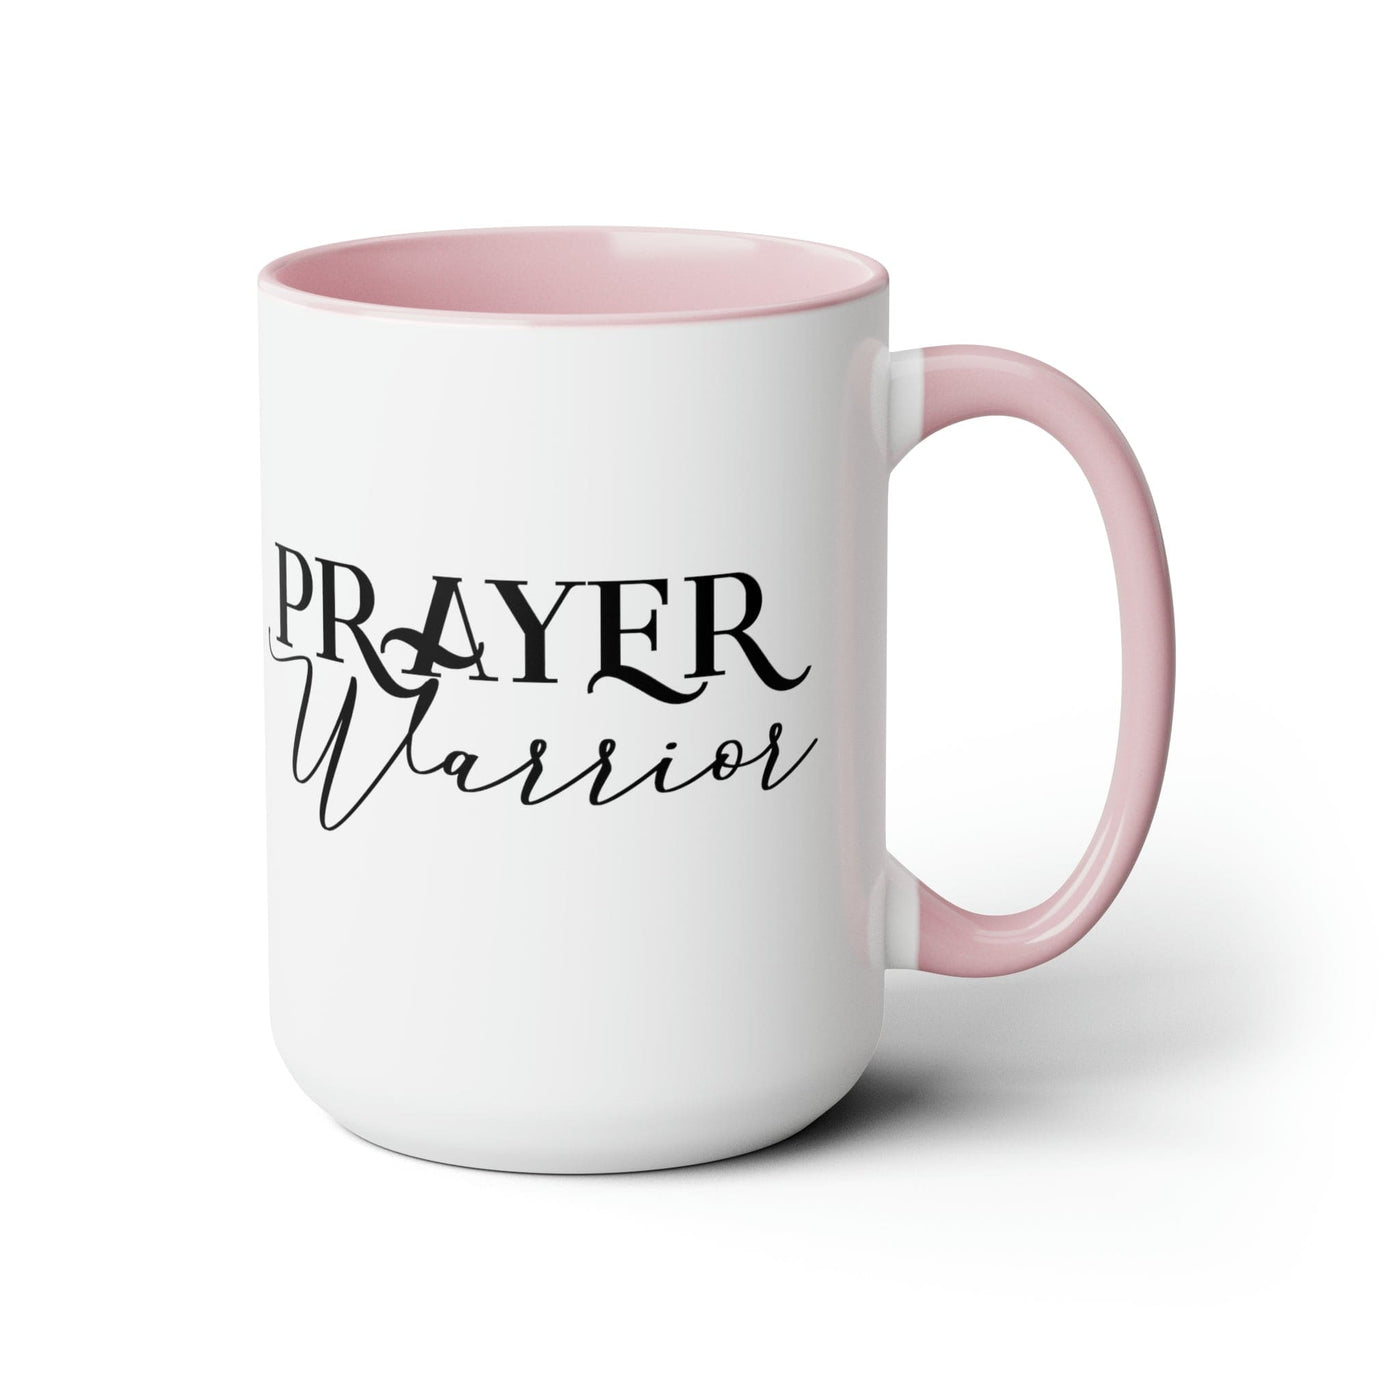 Accent Ceramic Coffee Mug 15oz - Prayer Warrior Black Illustration - Mug